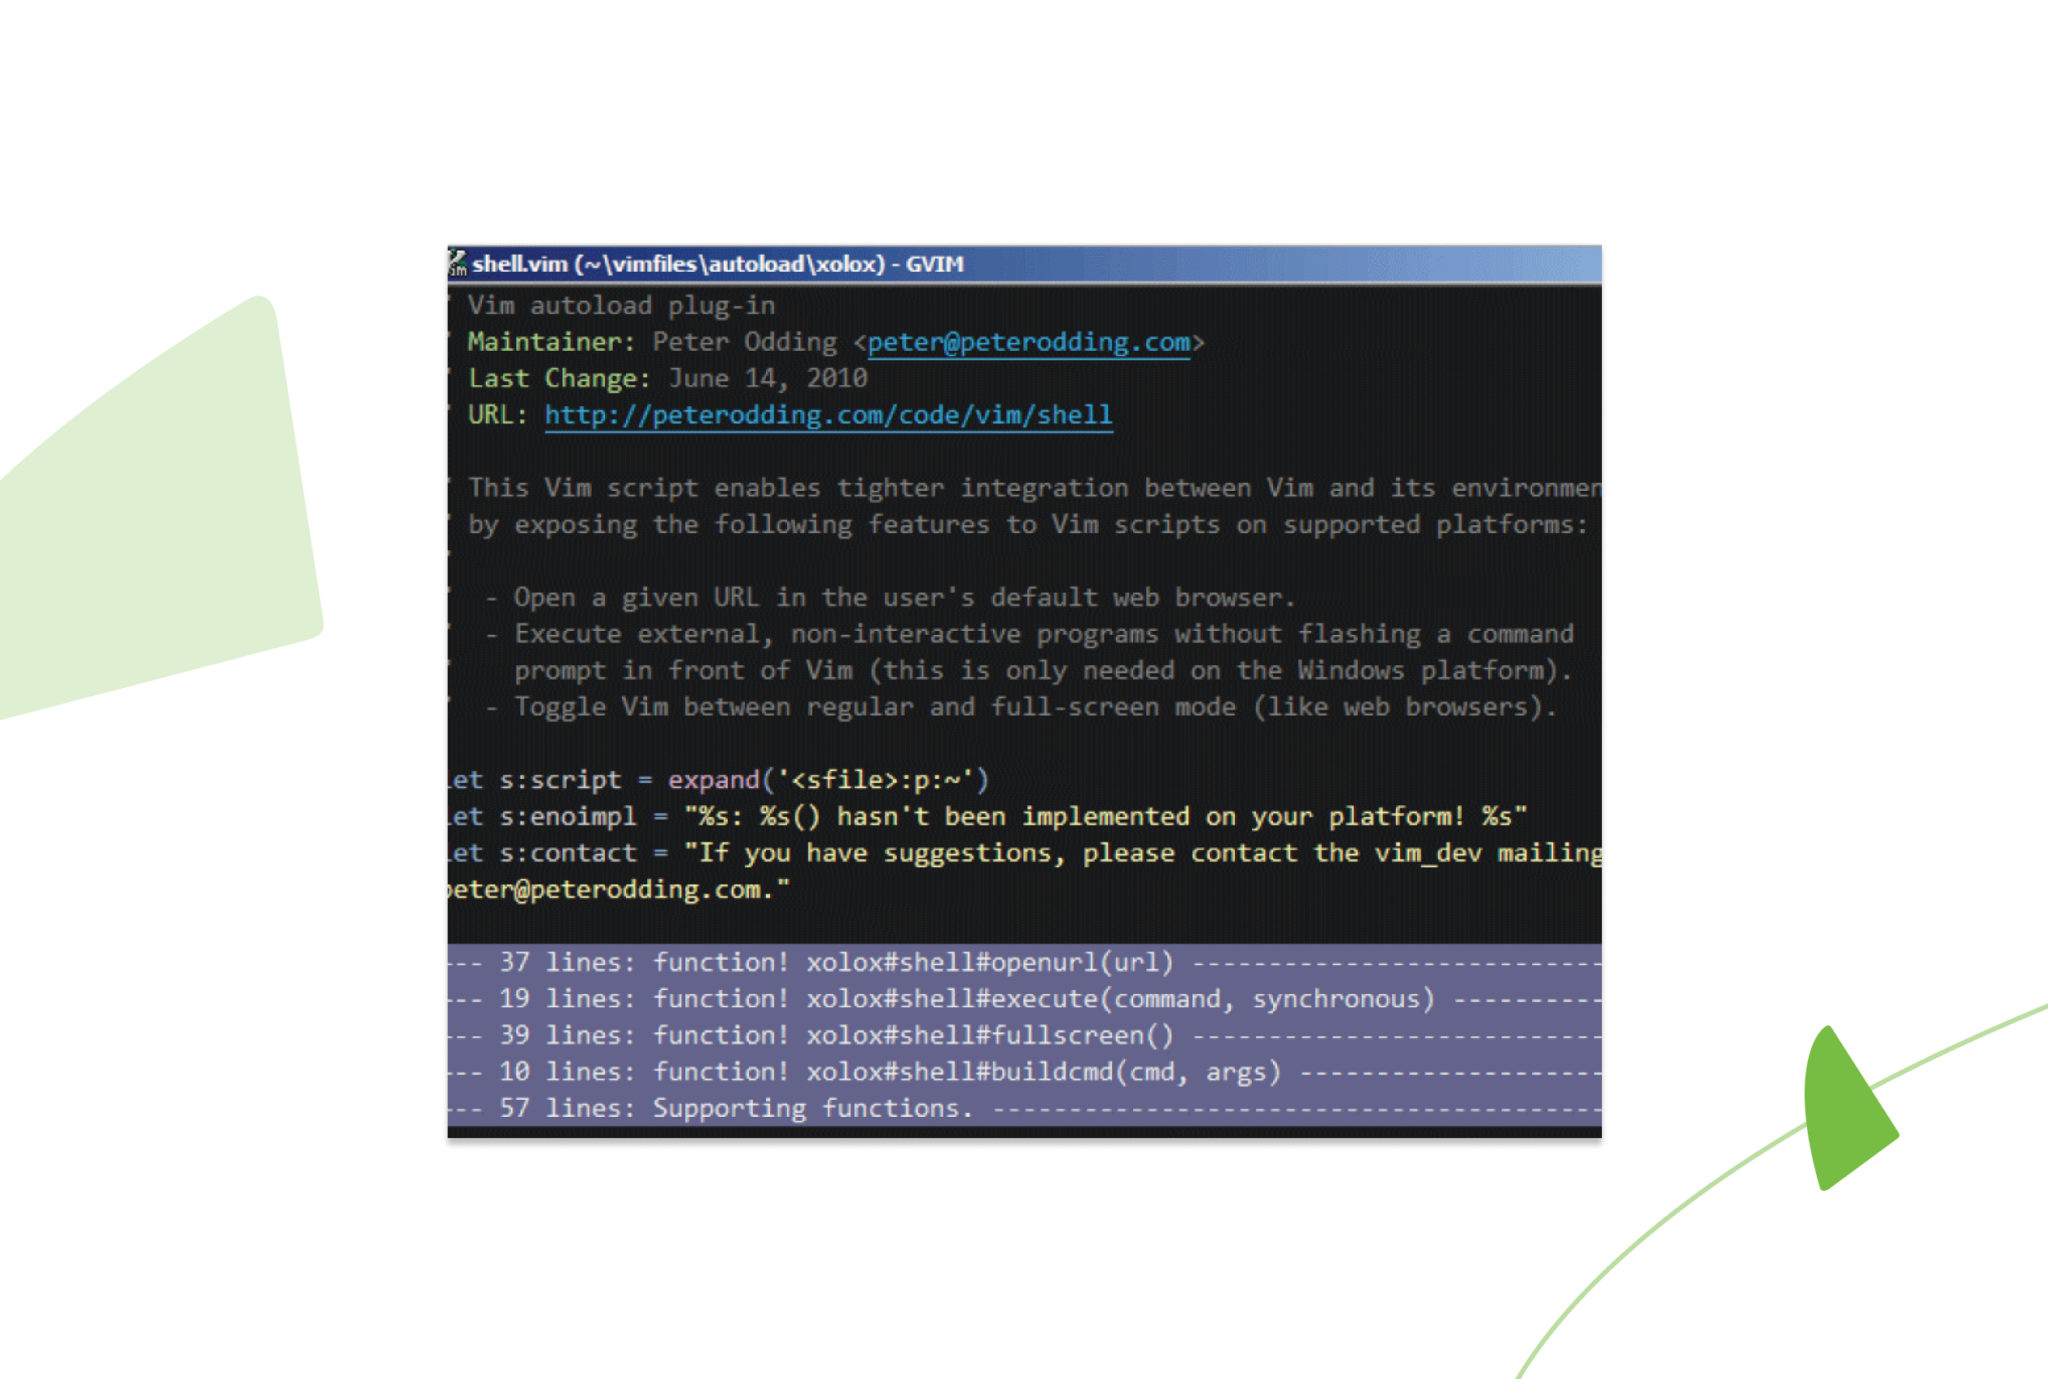 best python code editor for windows